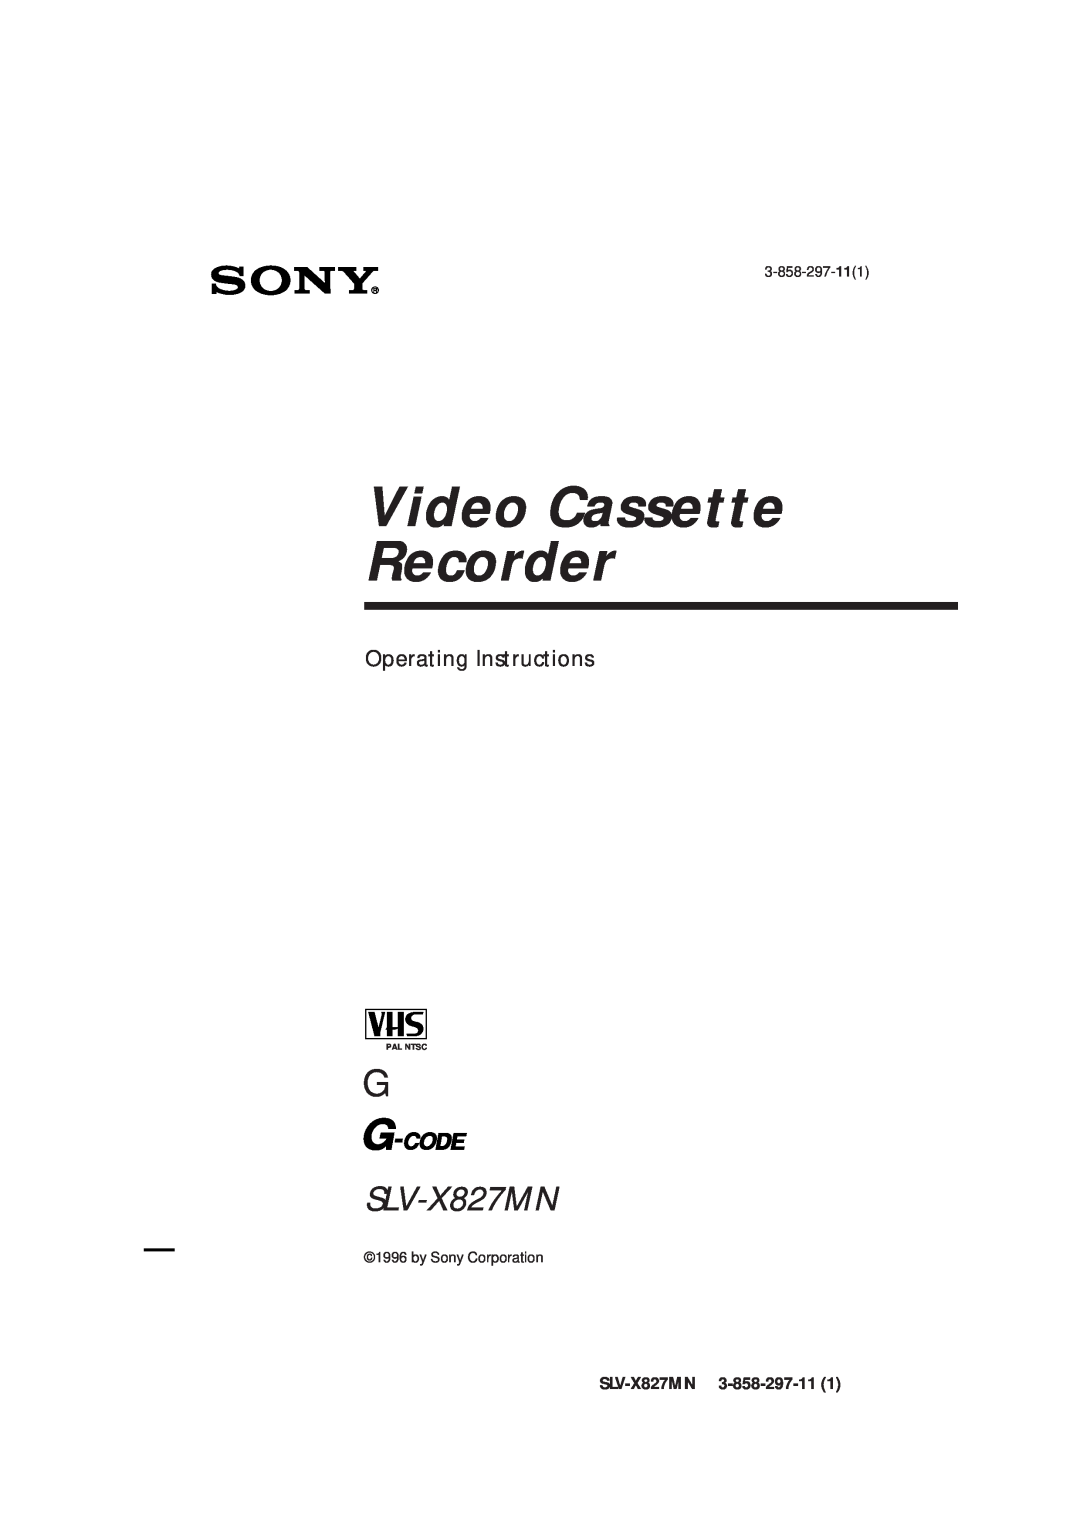 Sony manual Video Cassette Recorder, Operating Instructions, SLV-X827MN 3-858-297-11, 3-858-297-111, Pal Ntsc 